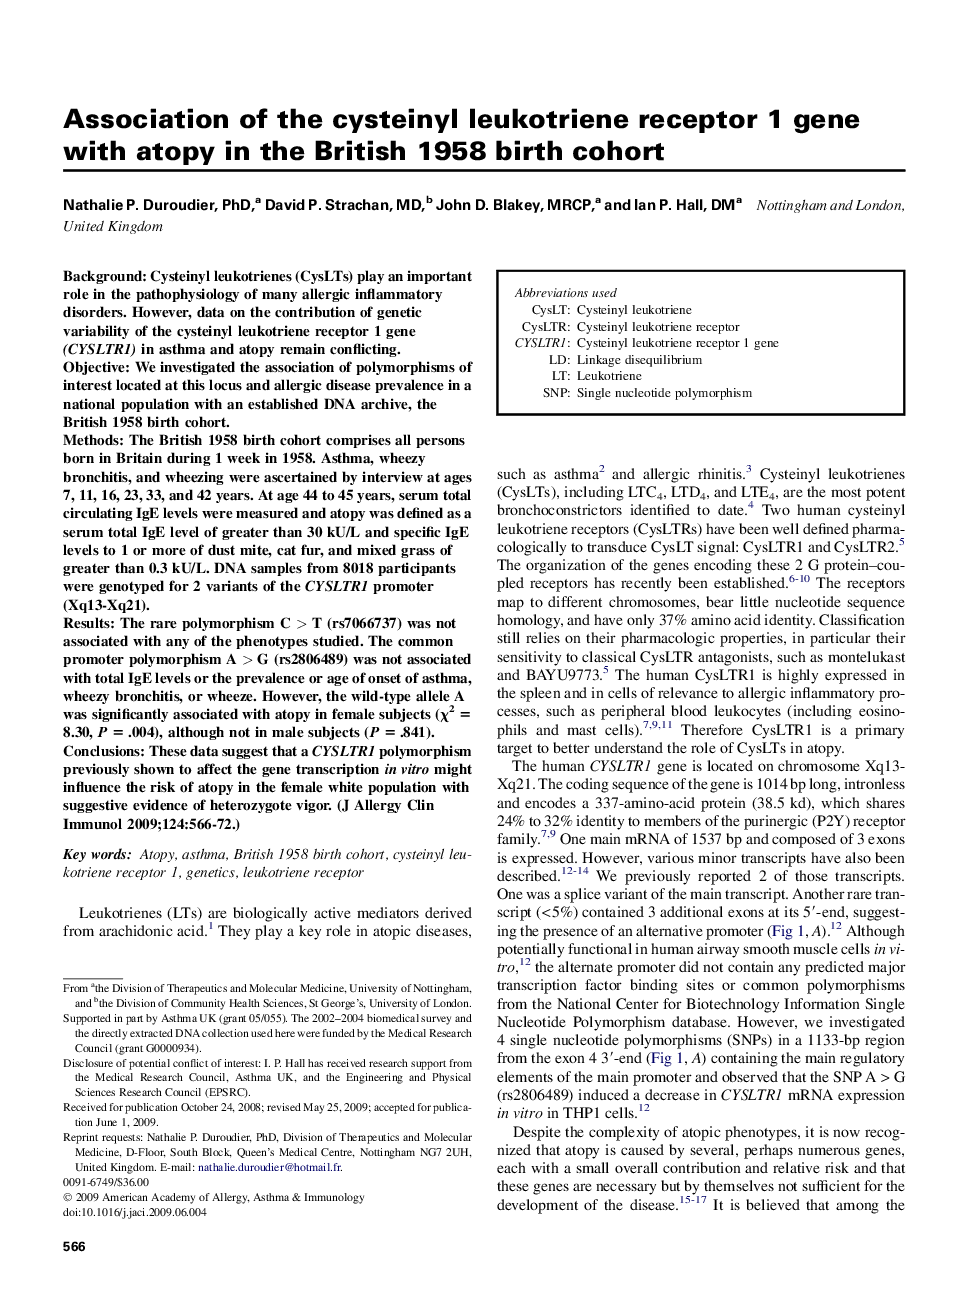 Association of the cysteinyl leukotriene receptor 1 gene with atopy in the British 1958 birth cohort